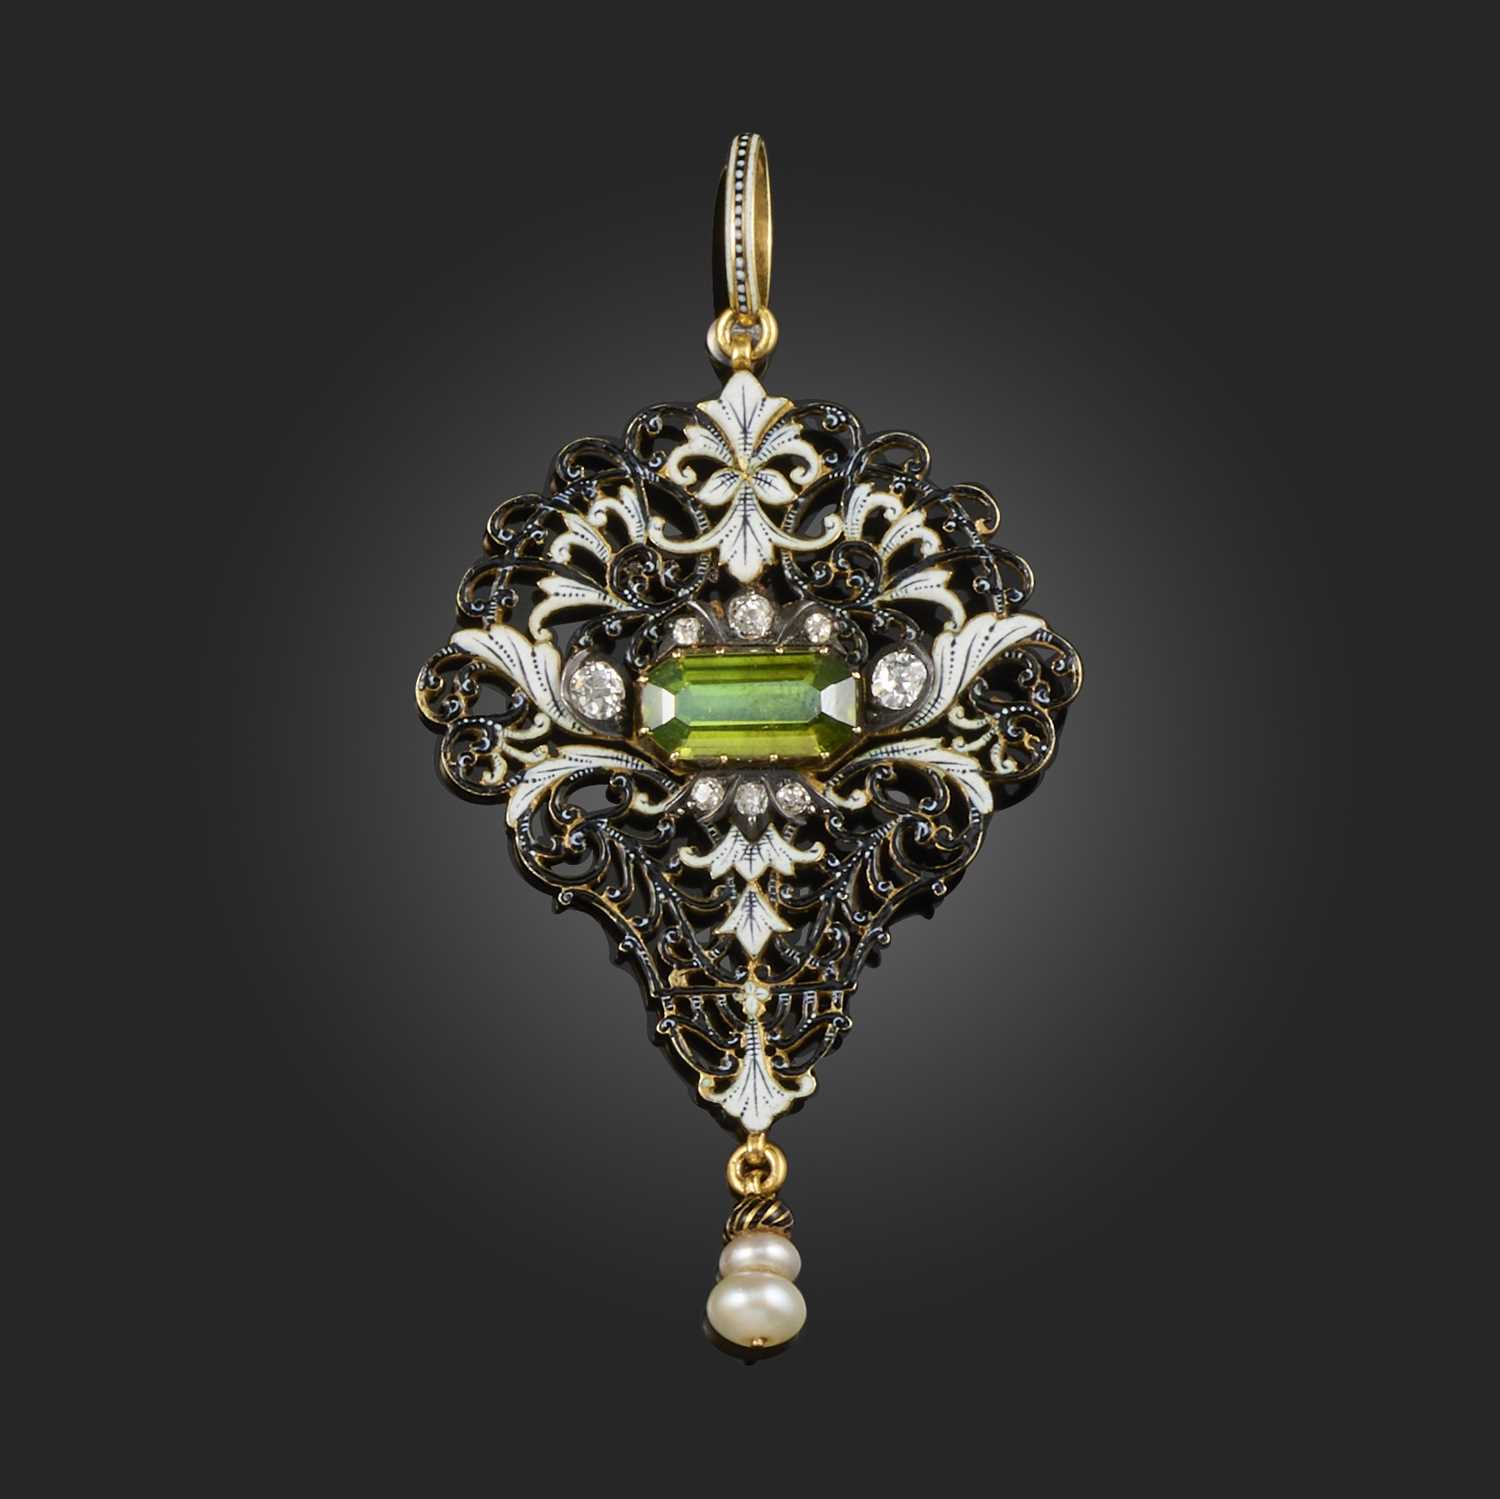 Carlo Giuliano, an enamel, zircon, pearl and diamond pendant, late 19th century, of elaborate